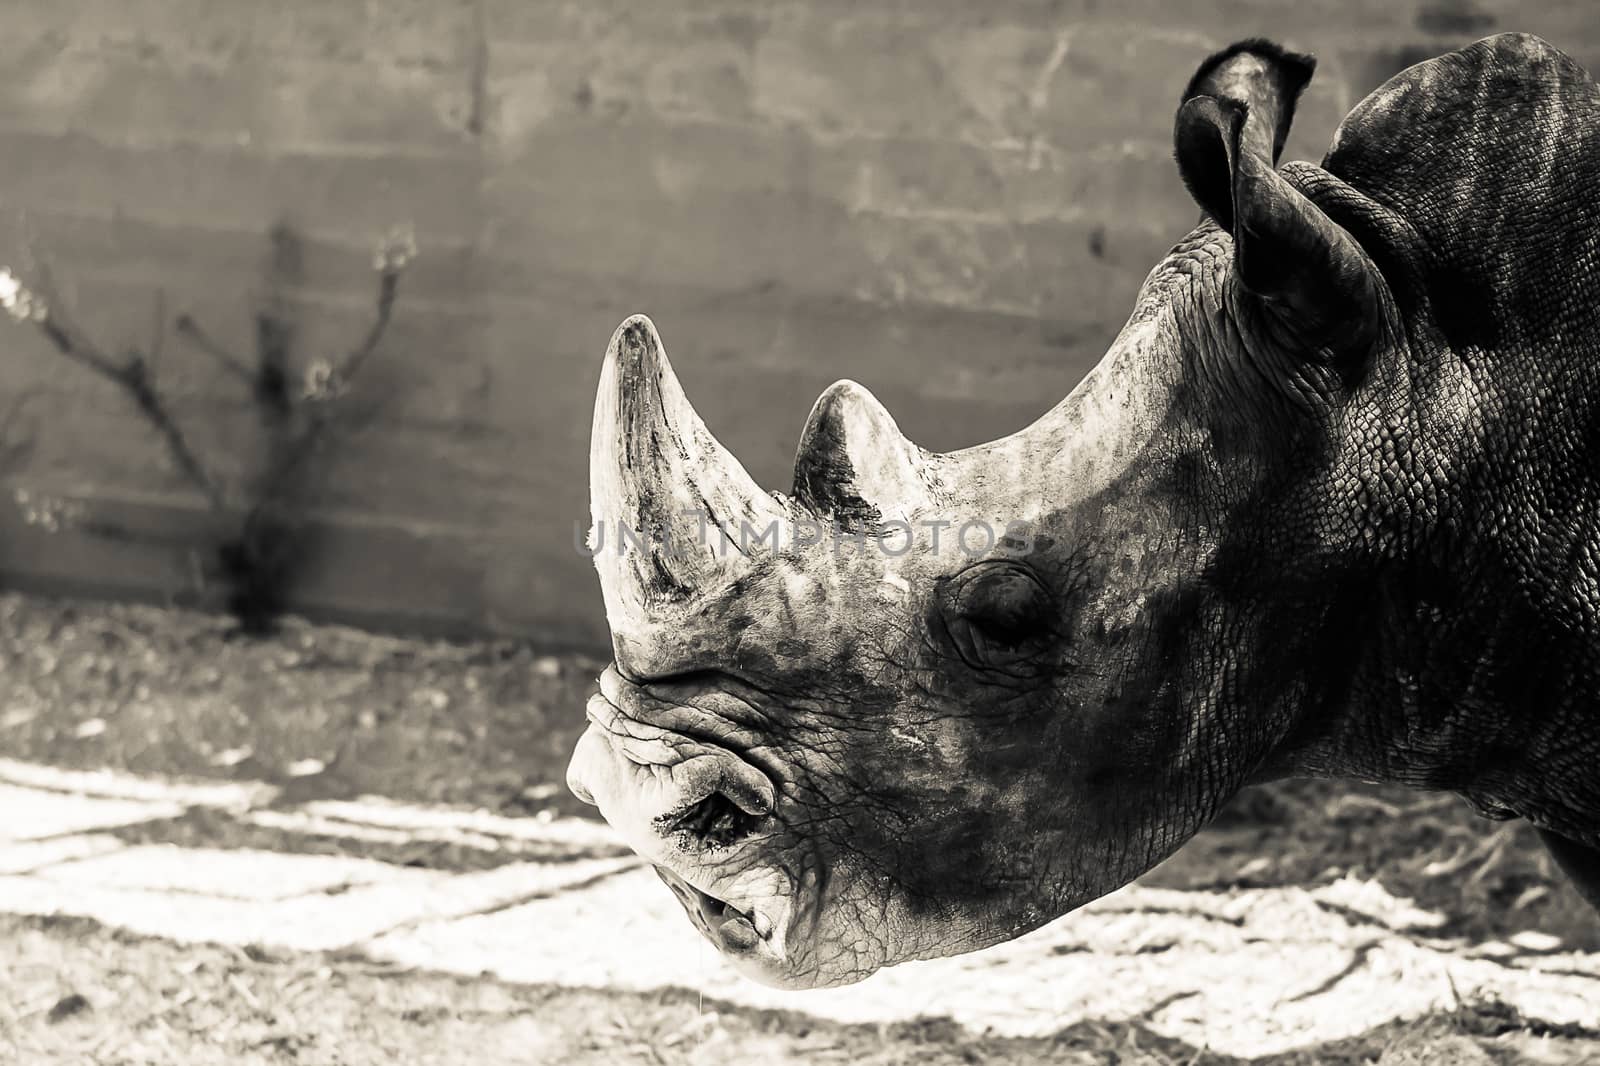 Rhino by cedicocinovo